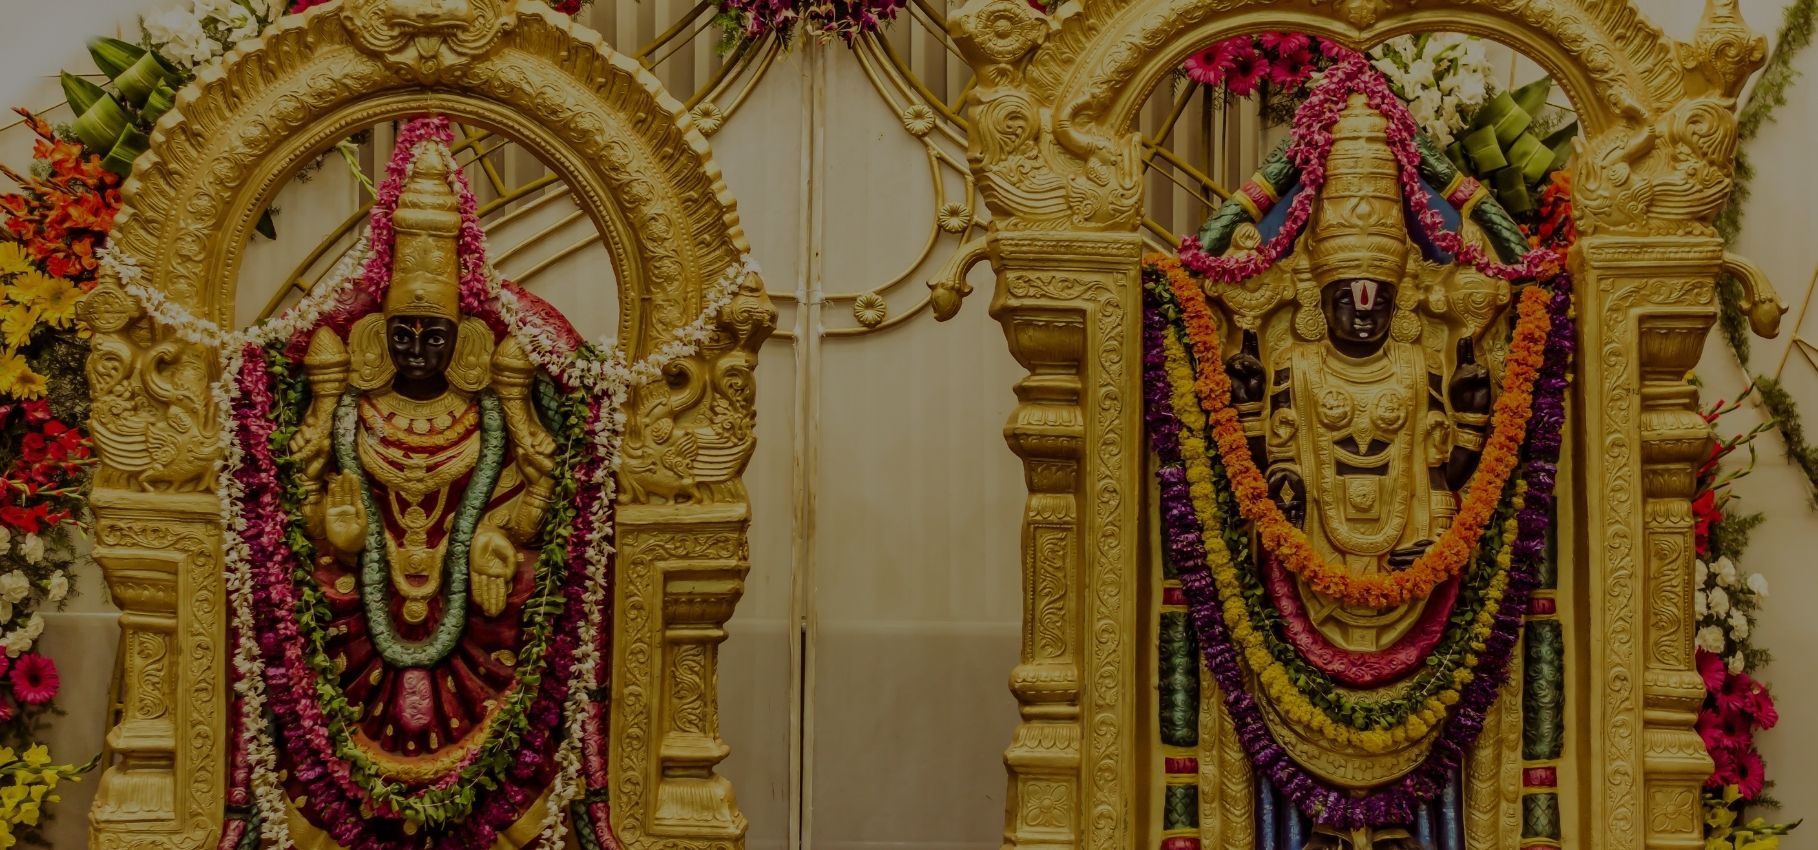 How to visit Tirupati balaji, India